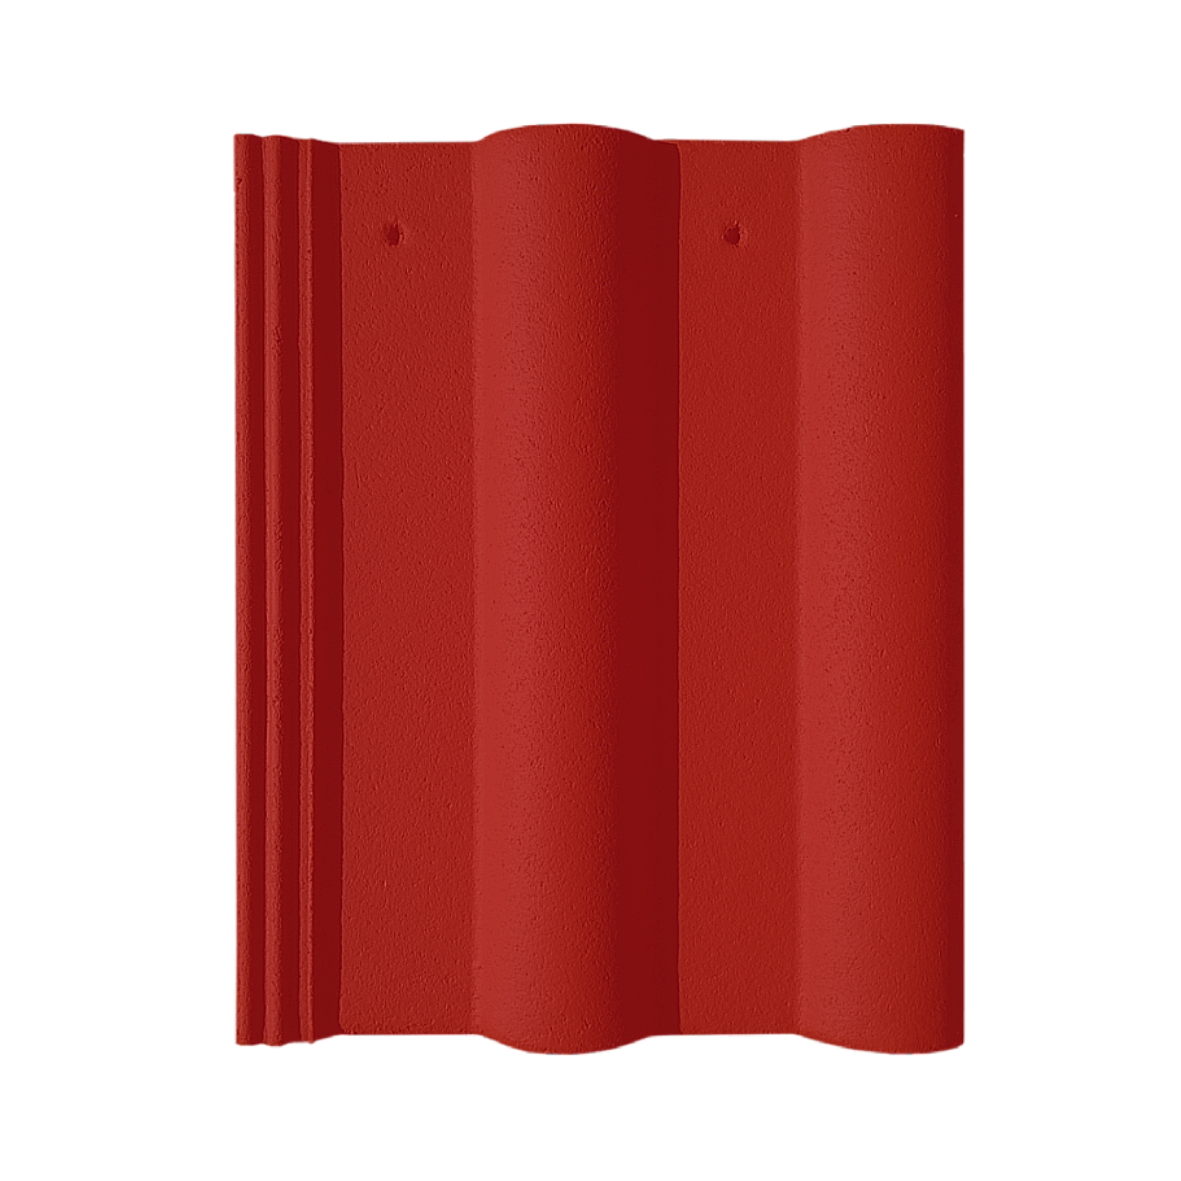 Tigla beton si accesorii - Tigla de beton Nova Double Roman rosu coral 420 x 330 mm, https:maxbau.ro